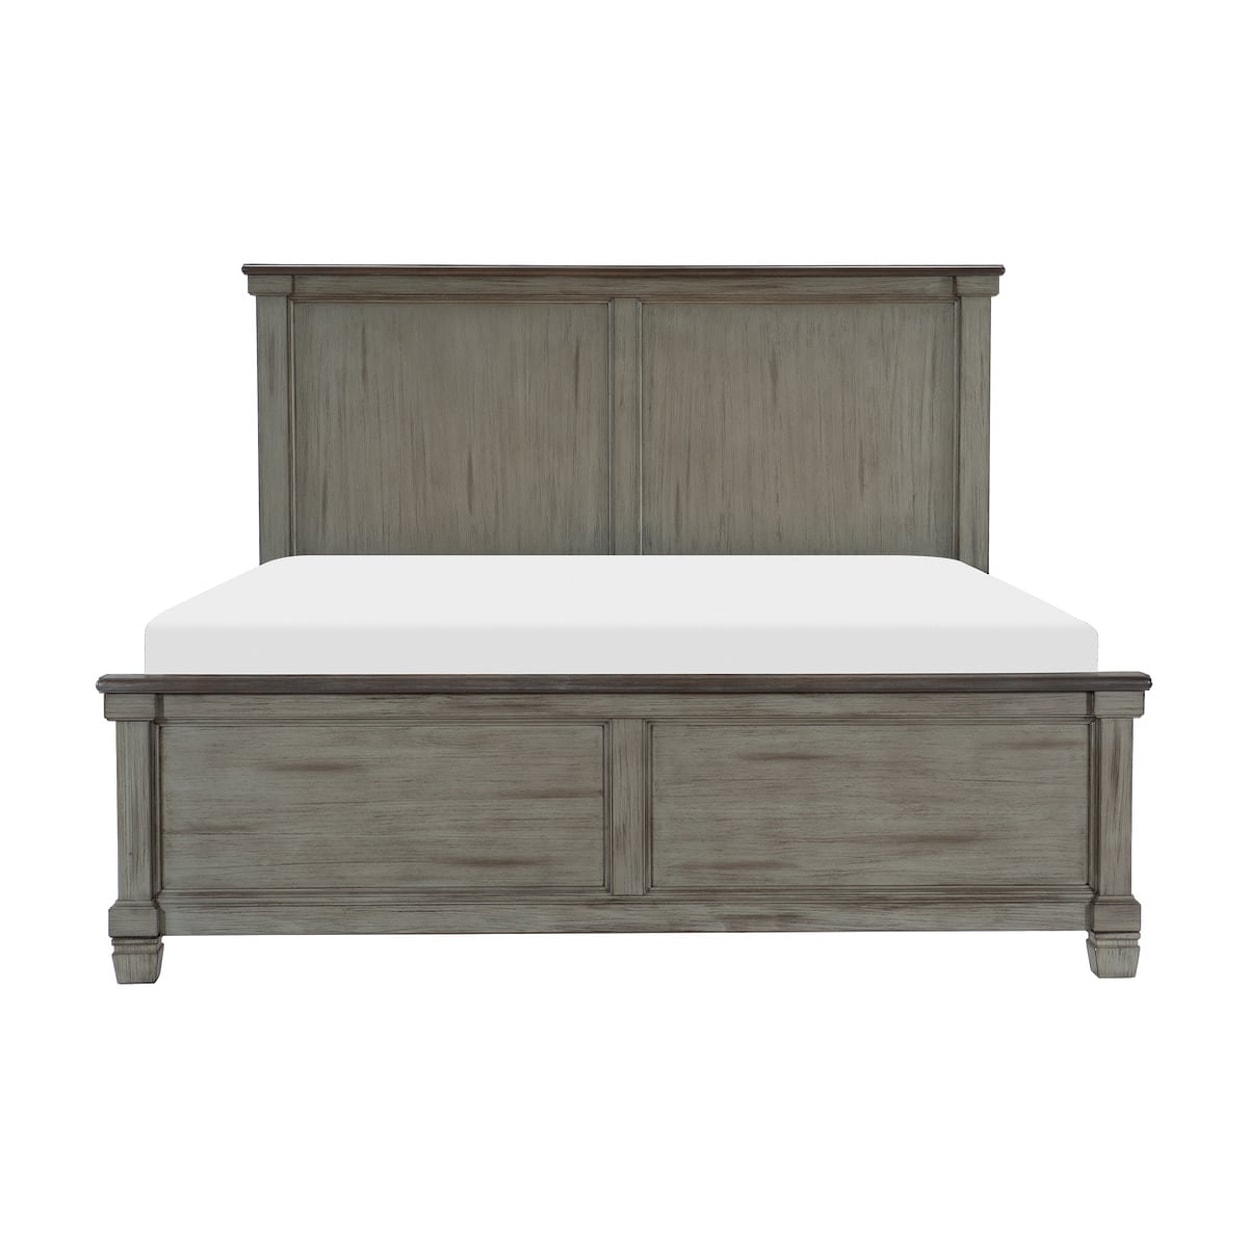 Homelegance Furniture Weaver California King Bed